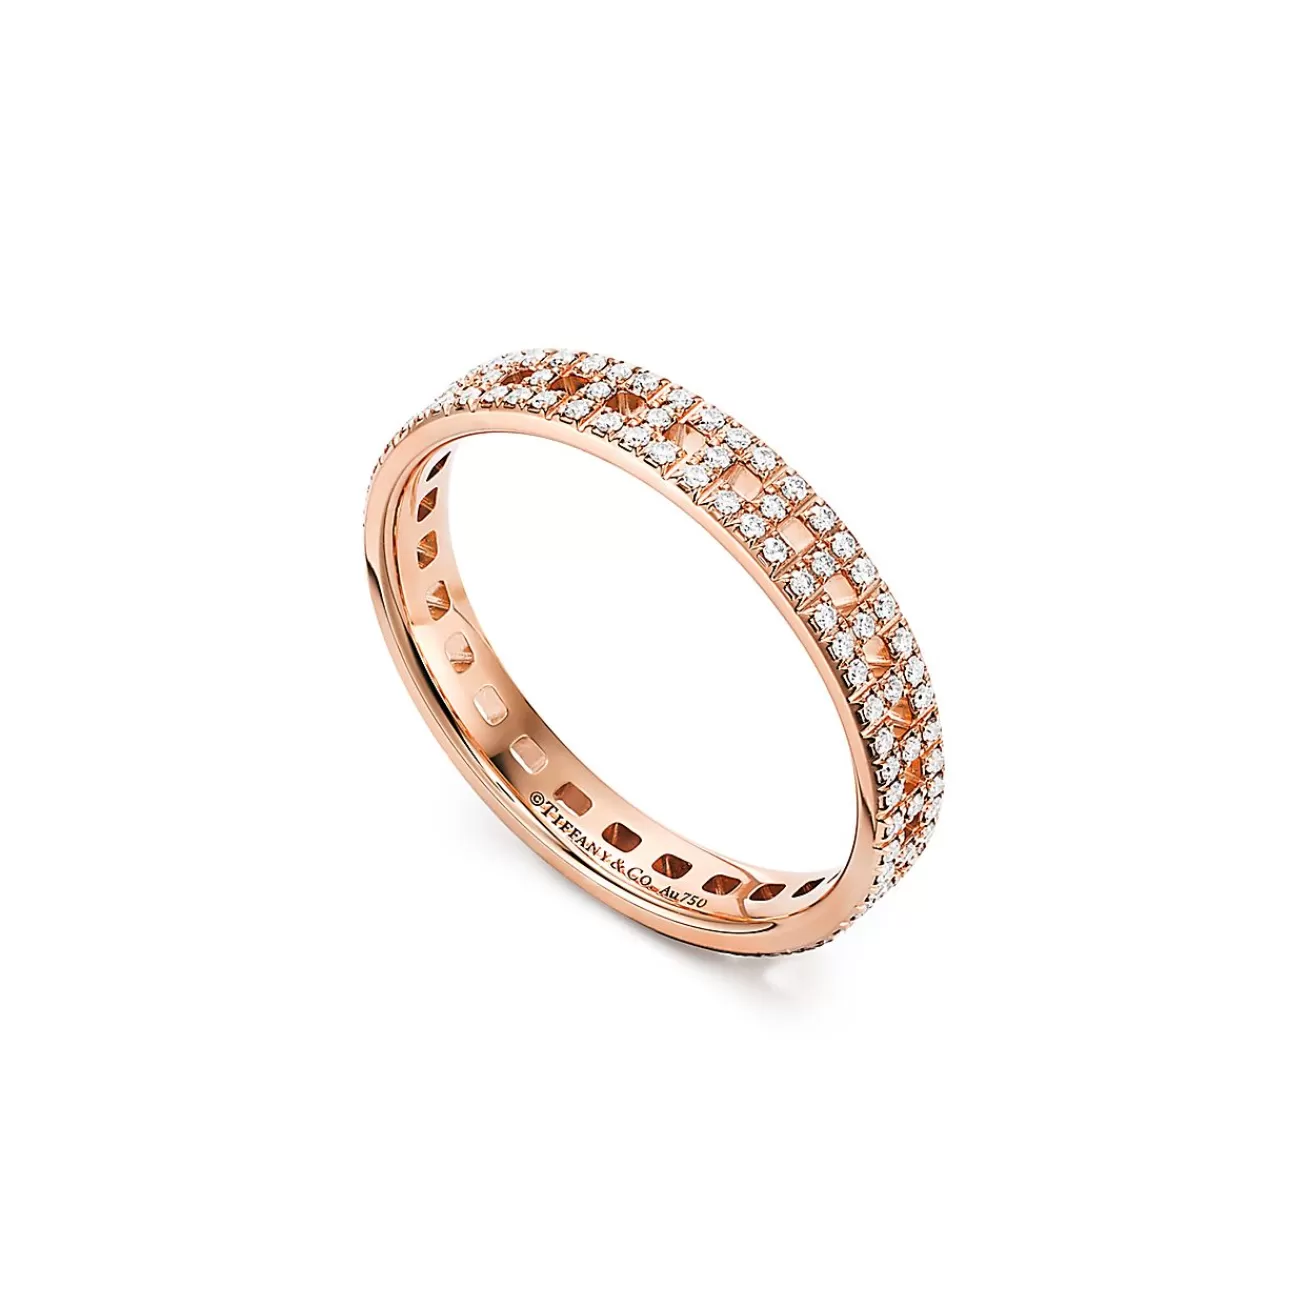 Tiffany & Co. Tiffany T True narrow ring in 18k rose gold with pavé diamonds, 3.5 mm wide. | ^Women Rings | Men's Jewelry